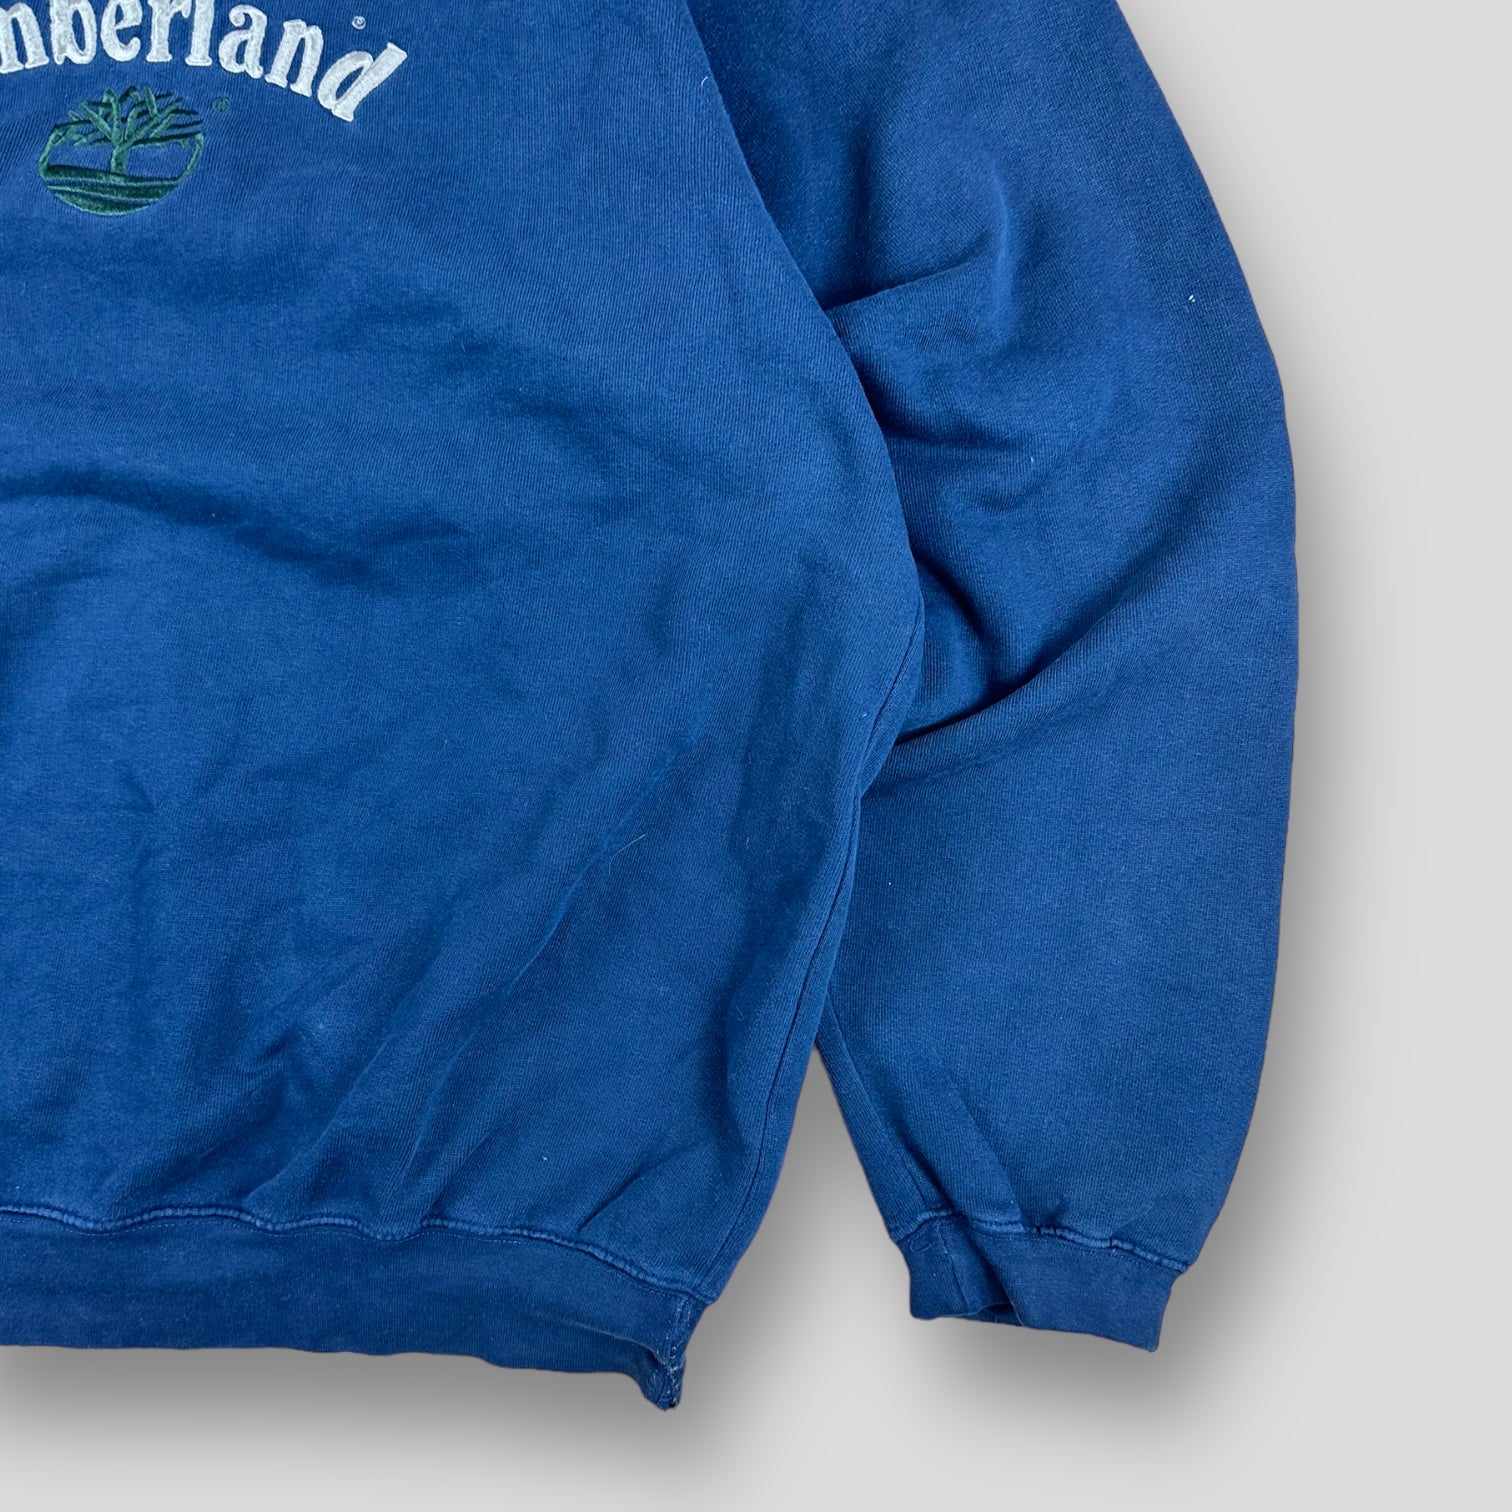 Timberland sweatshirt